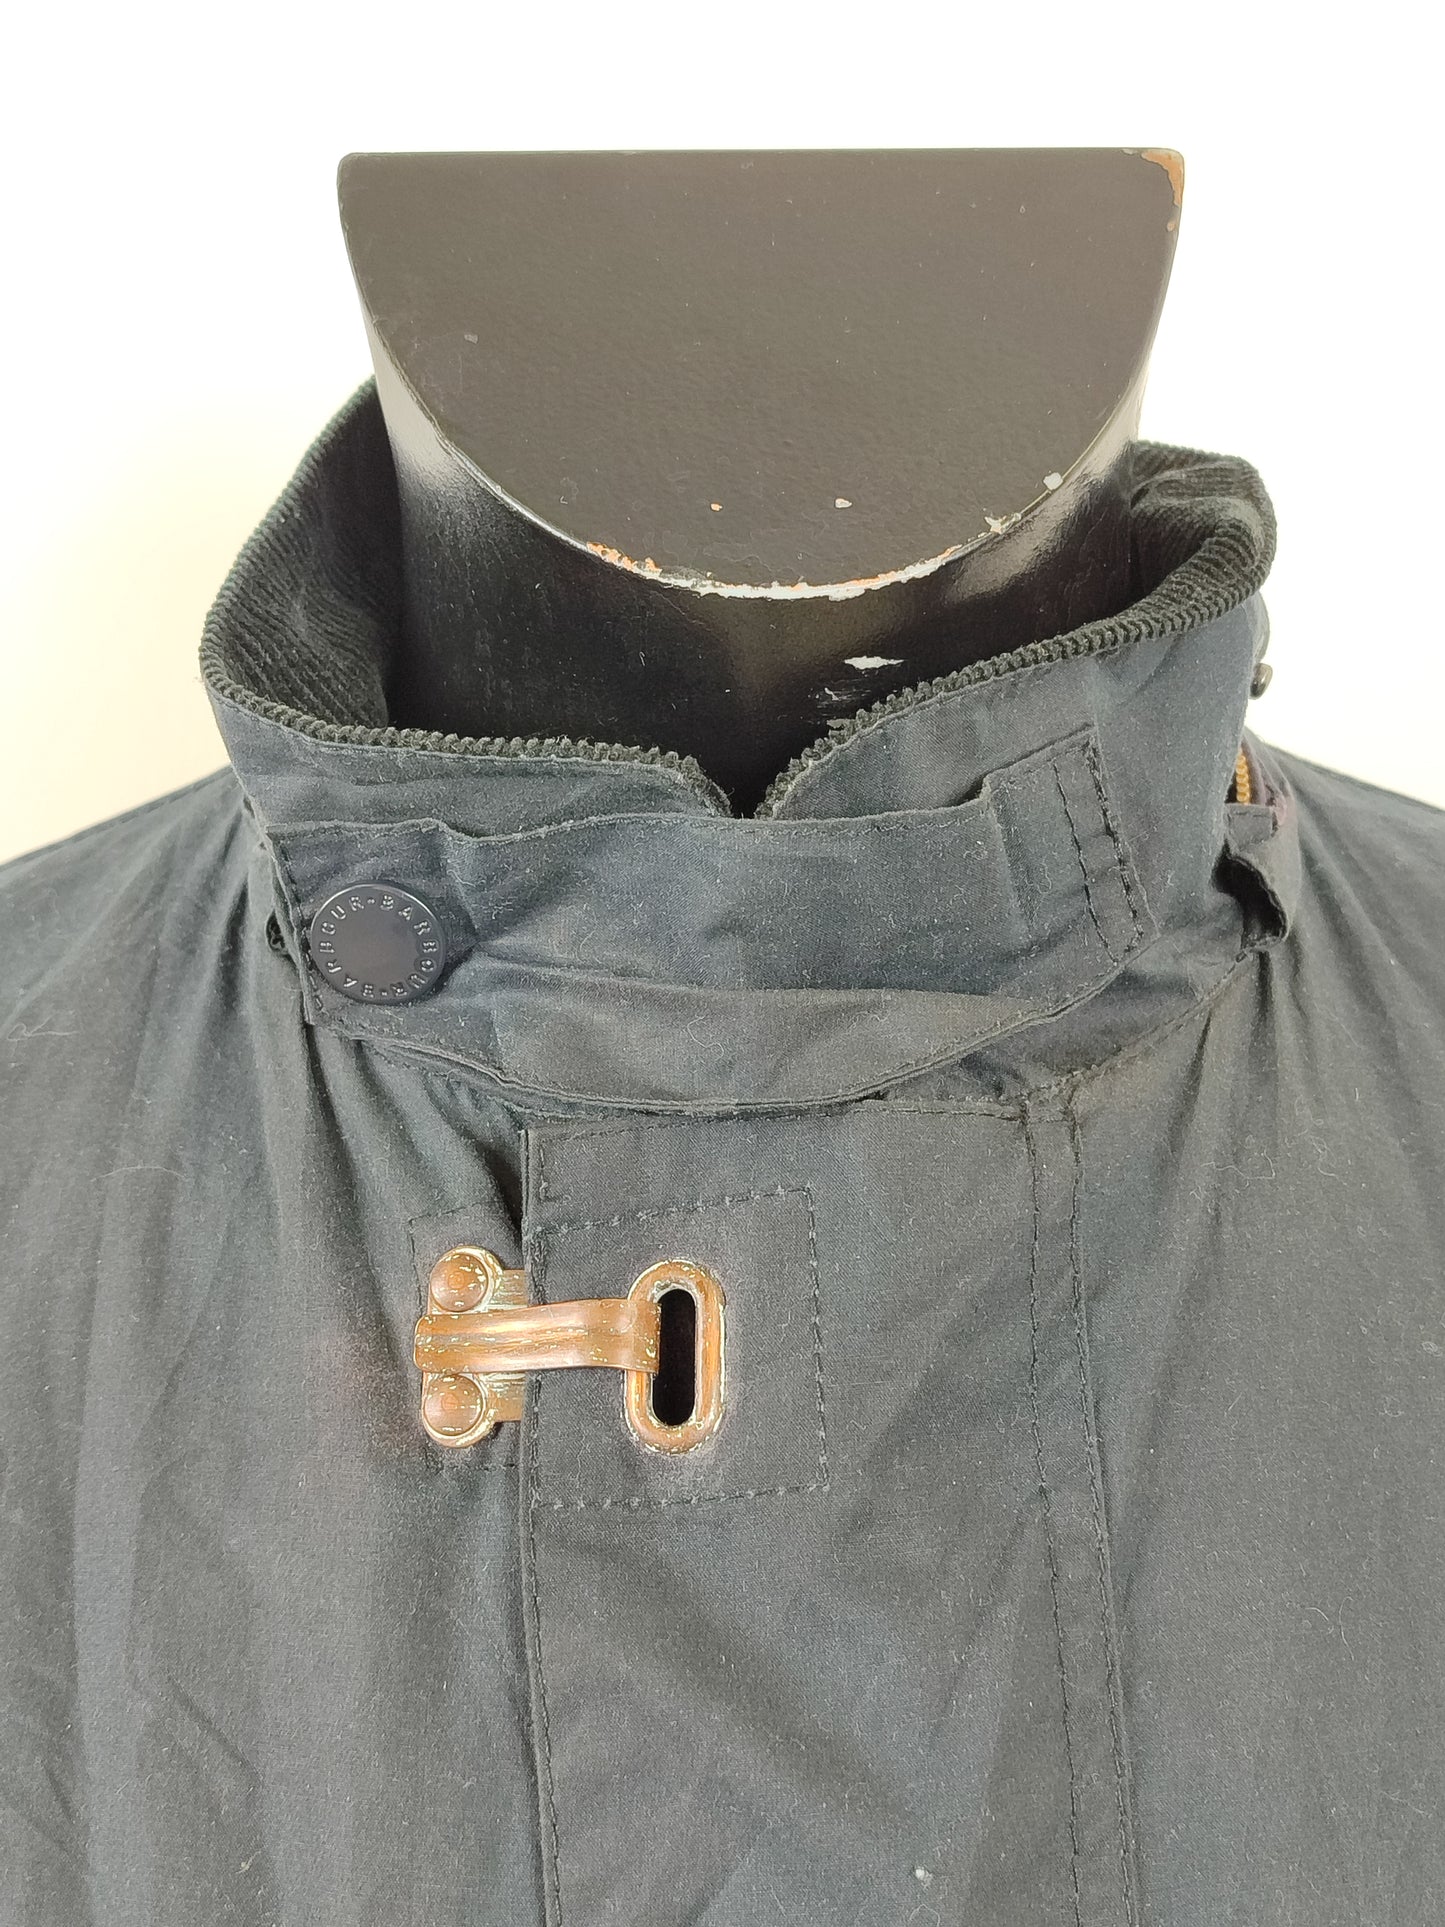 Giacca Barbour blu da uomo Small Masthead - Man Navy Masthead wax jacket size Small